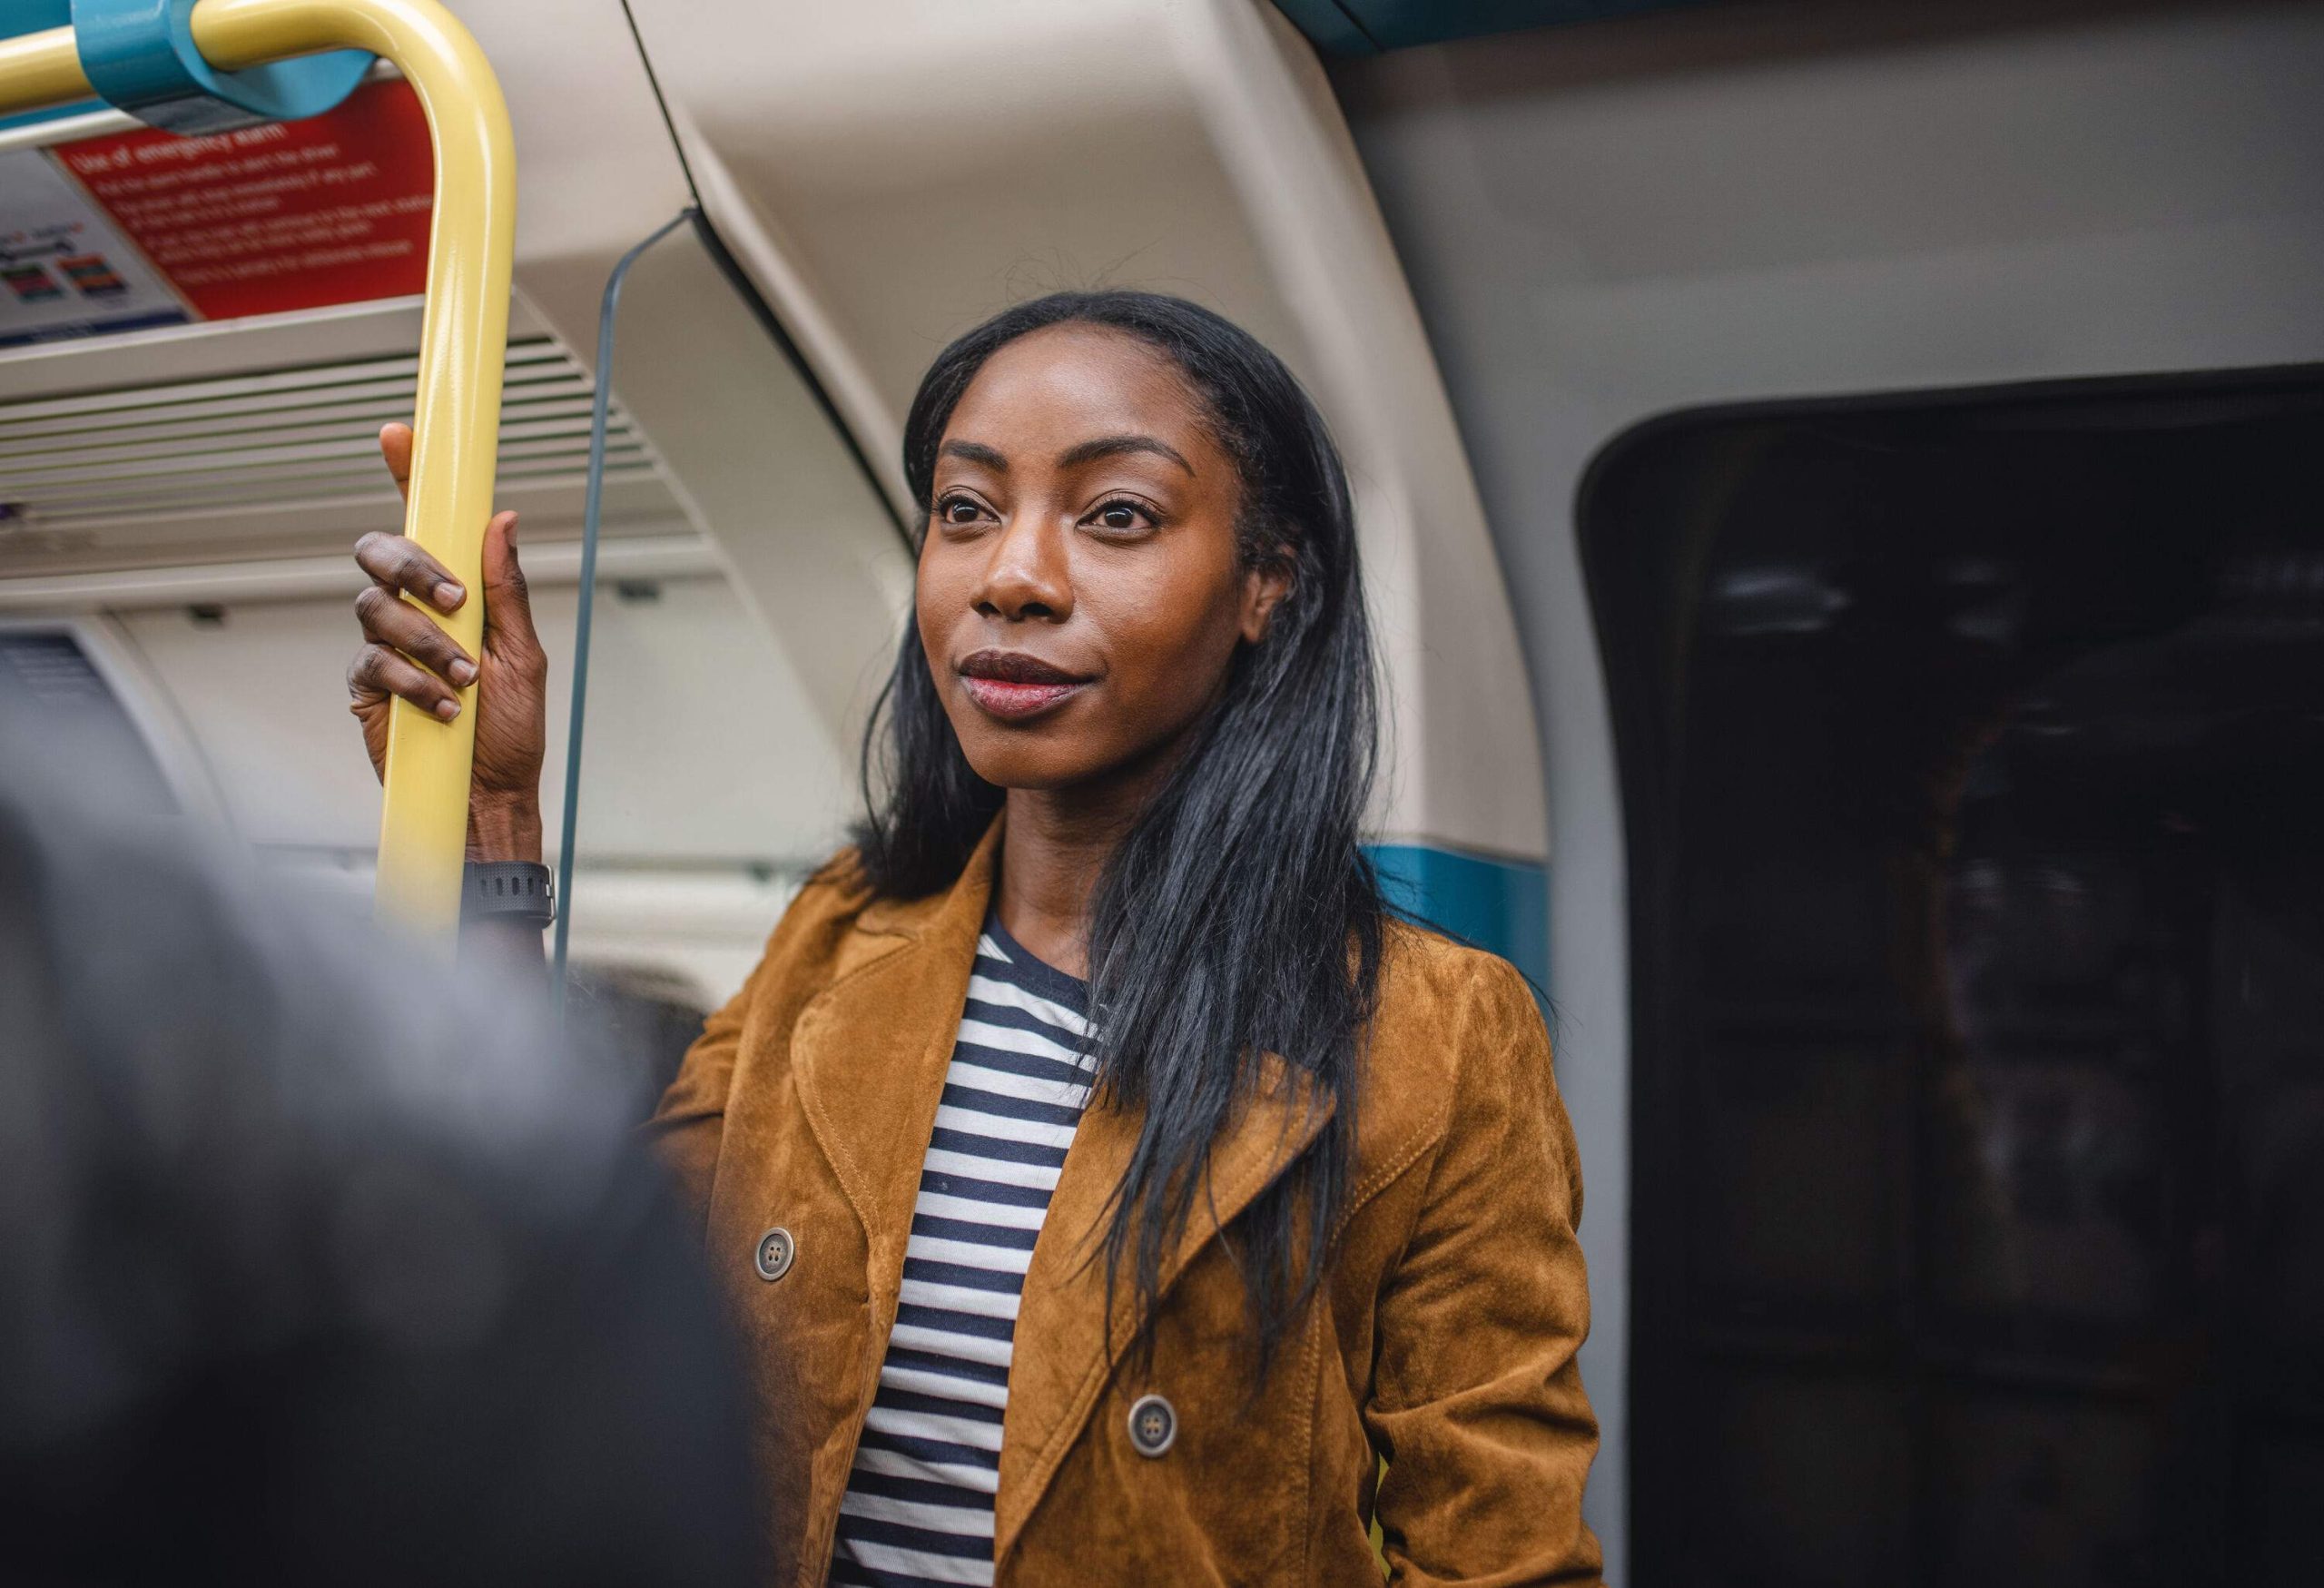 A dark-skinned long hair woman rides the train standing near the door.